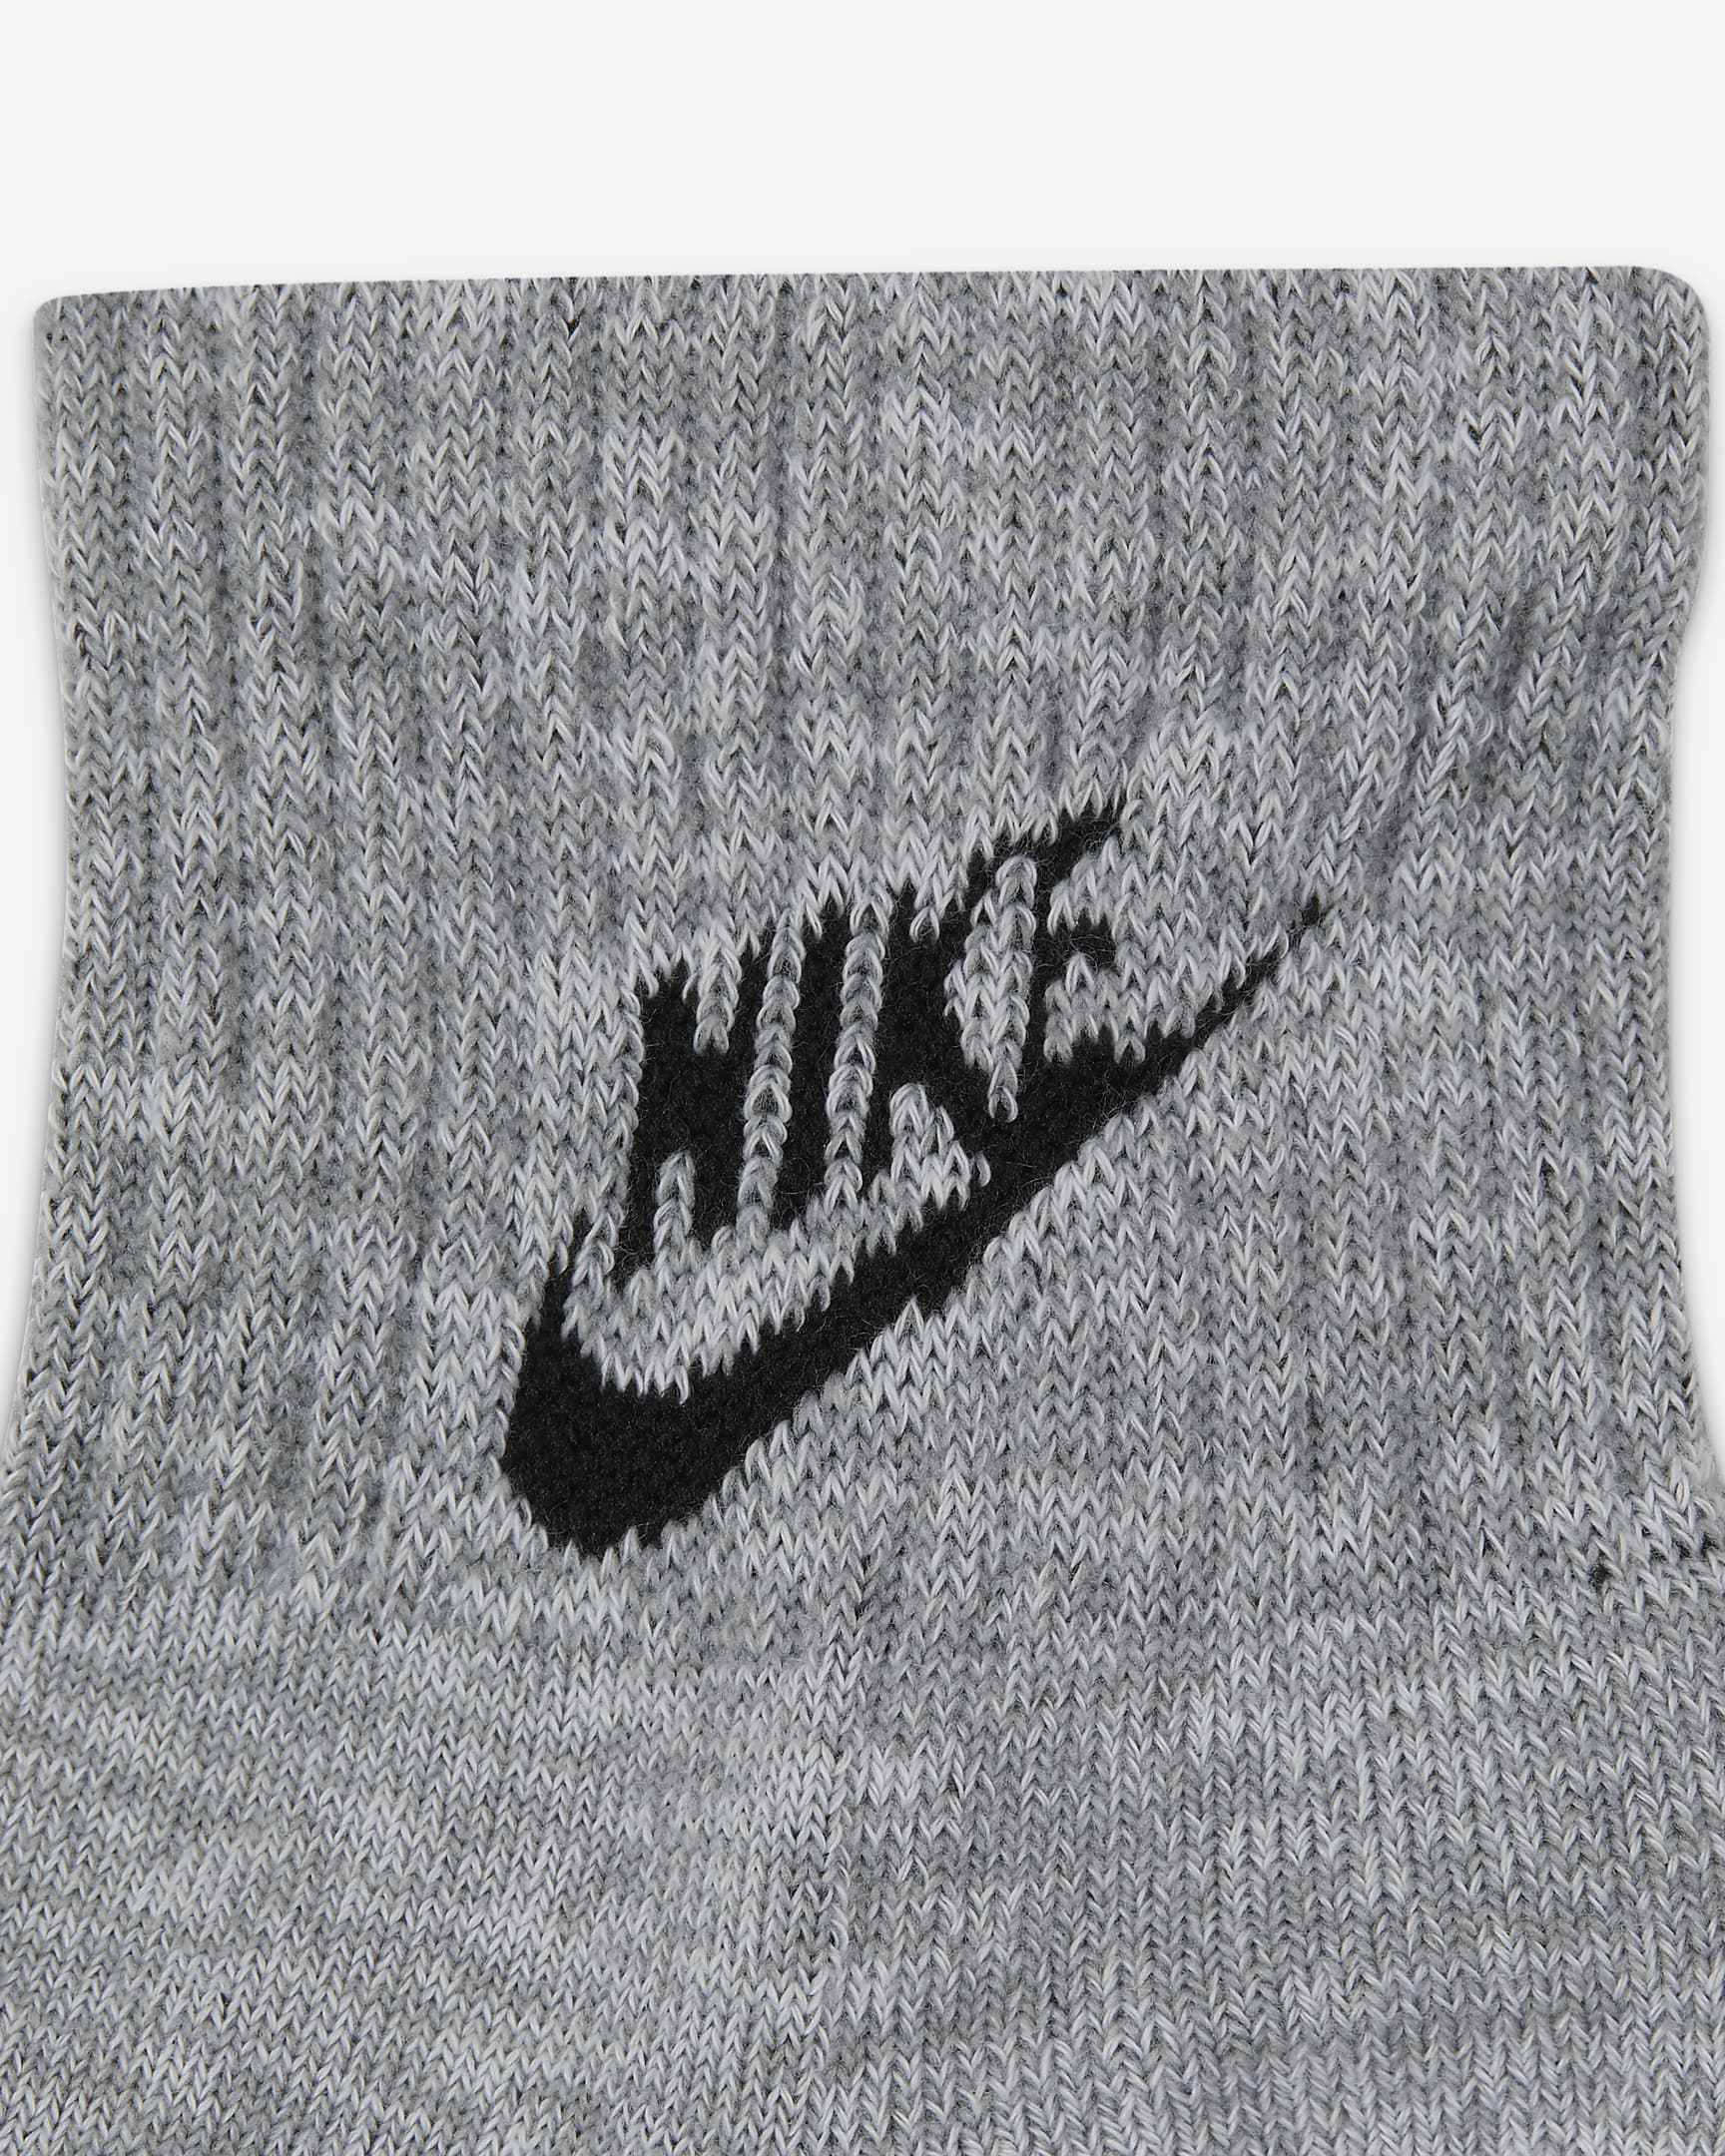 Nike Everyday Plus Cushioned Ankle Socks. Nike PH